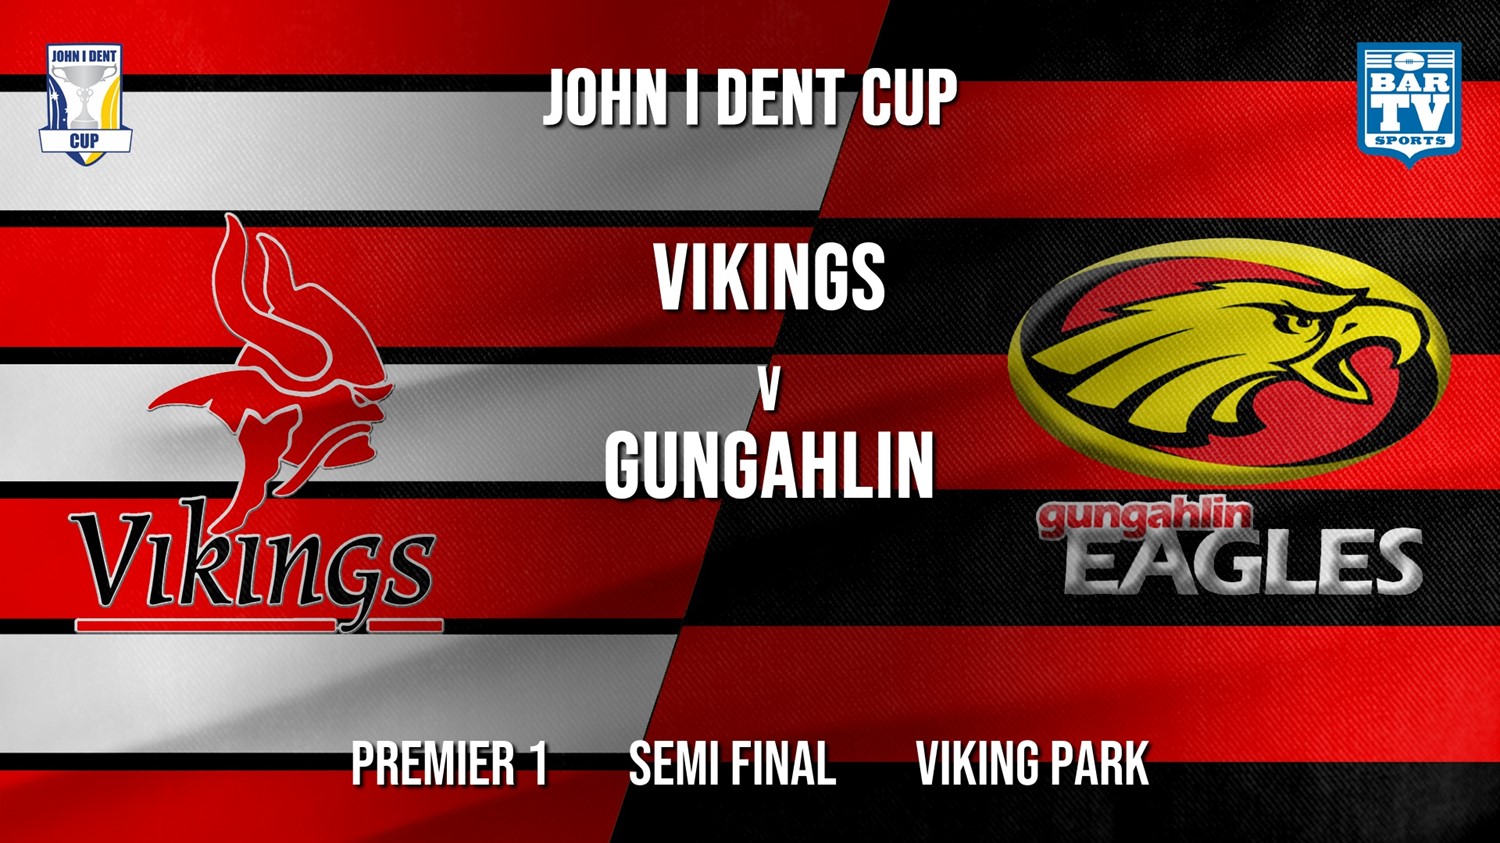 John I Dent Semi Final - Premier 1 - Tuggeranong Vikings v Gungahlin Eagles Minigame Slate Image